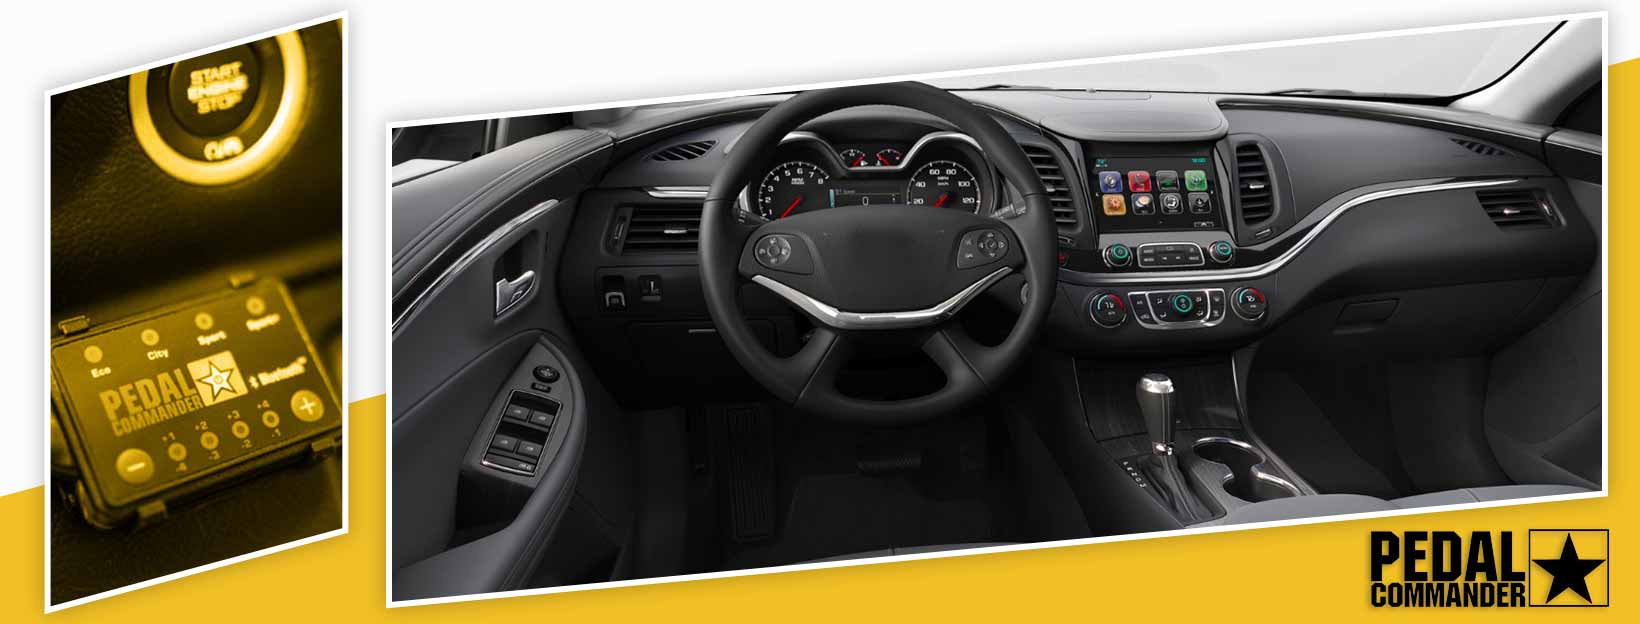 Pedal Commander for Chevrolet Impala - interior